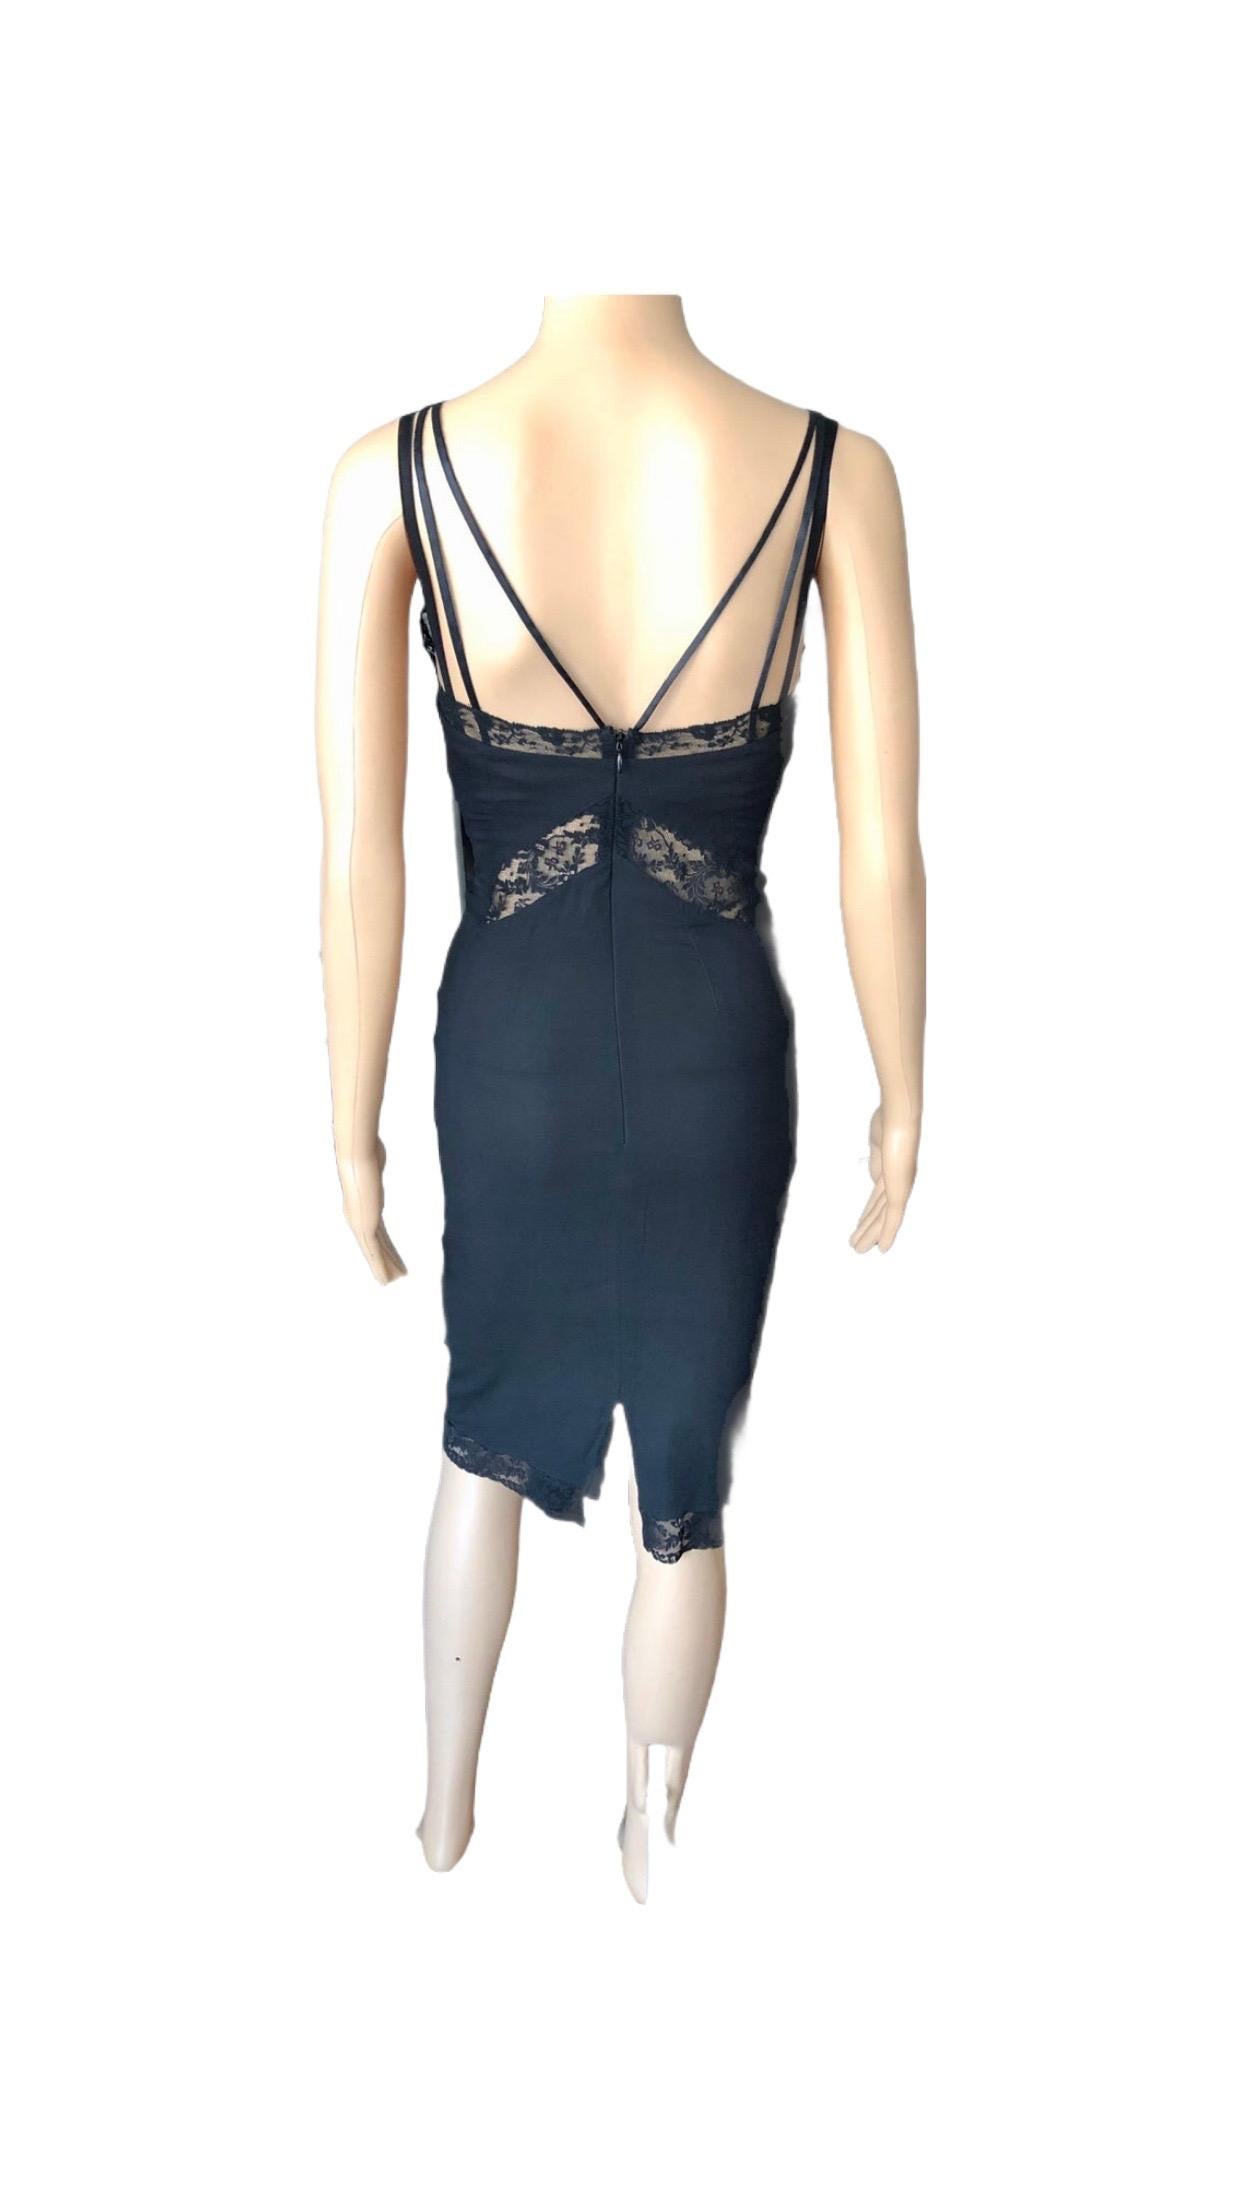 D&G by Dolce & Gabbana c. 2001 Corset Lace Up Bra Black Dress For Sale 4